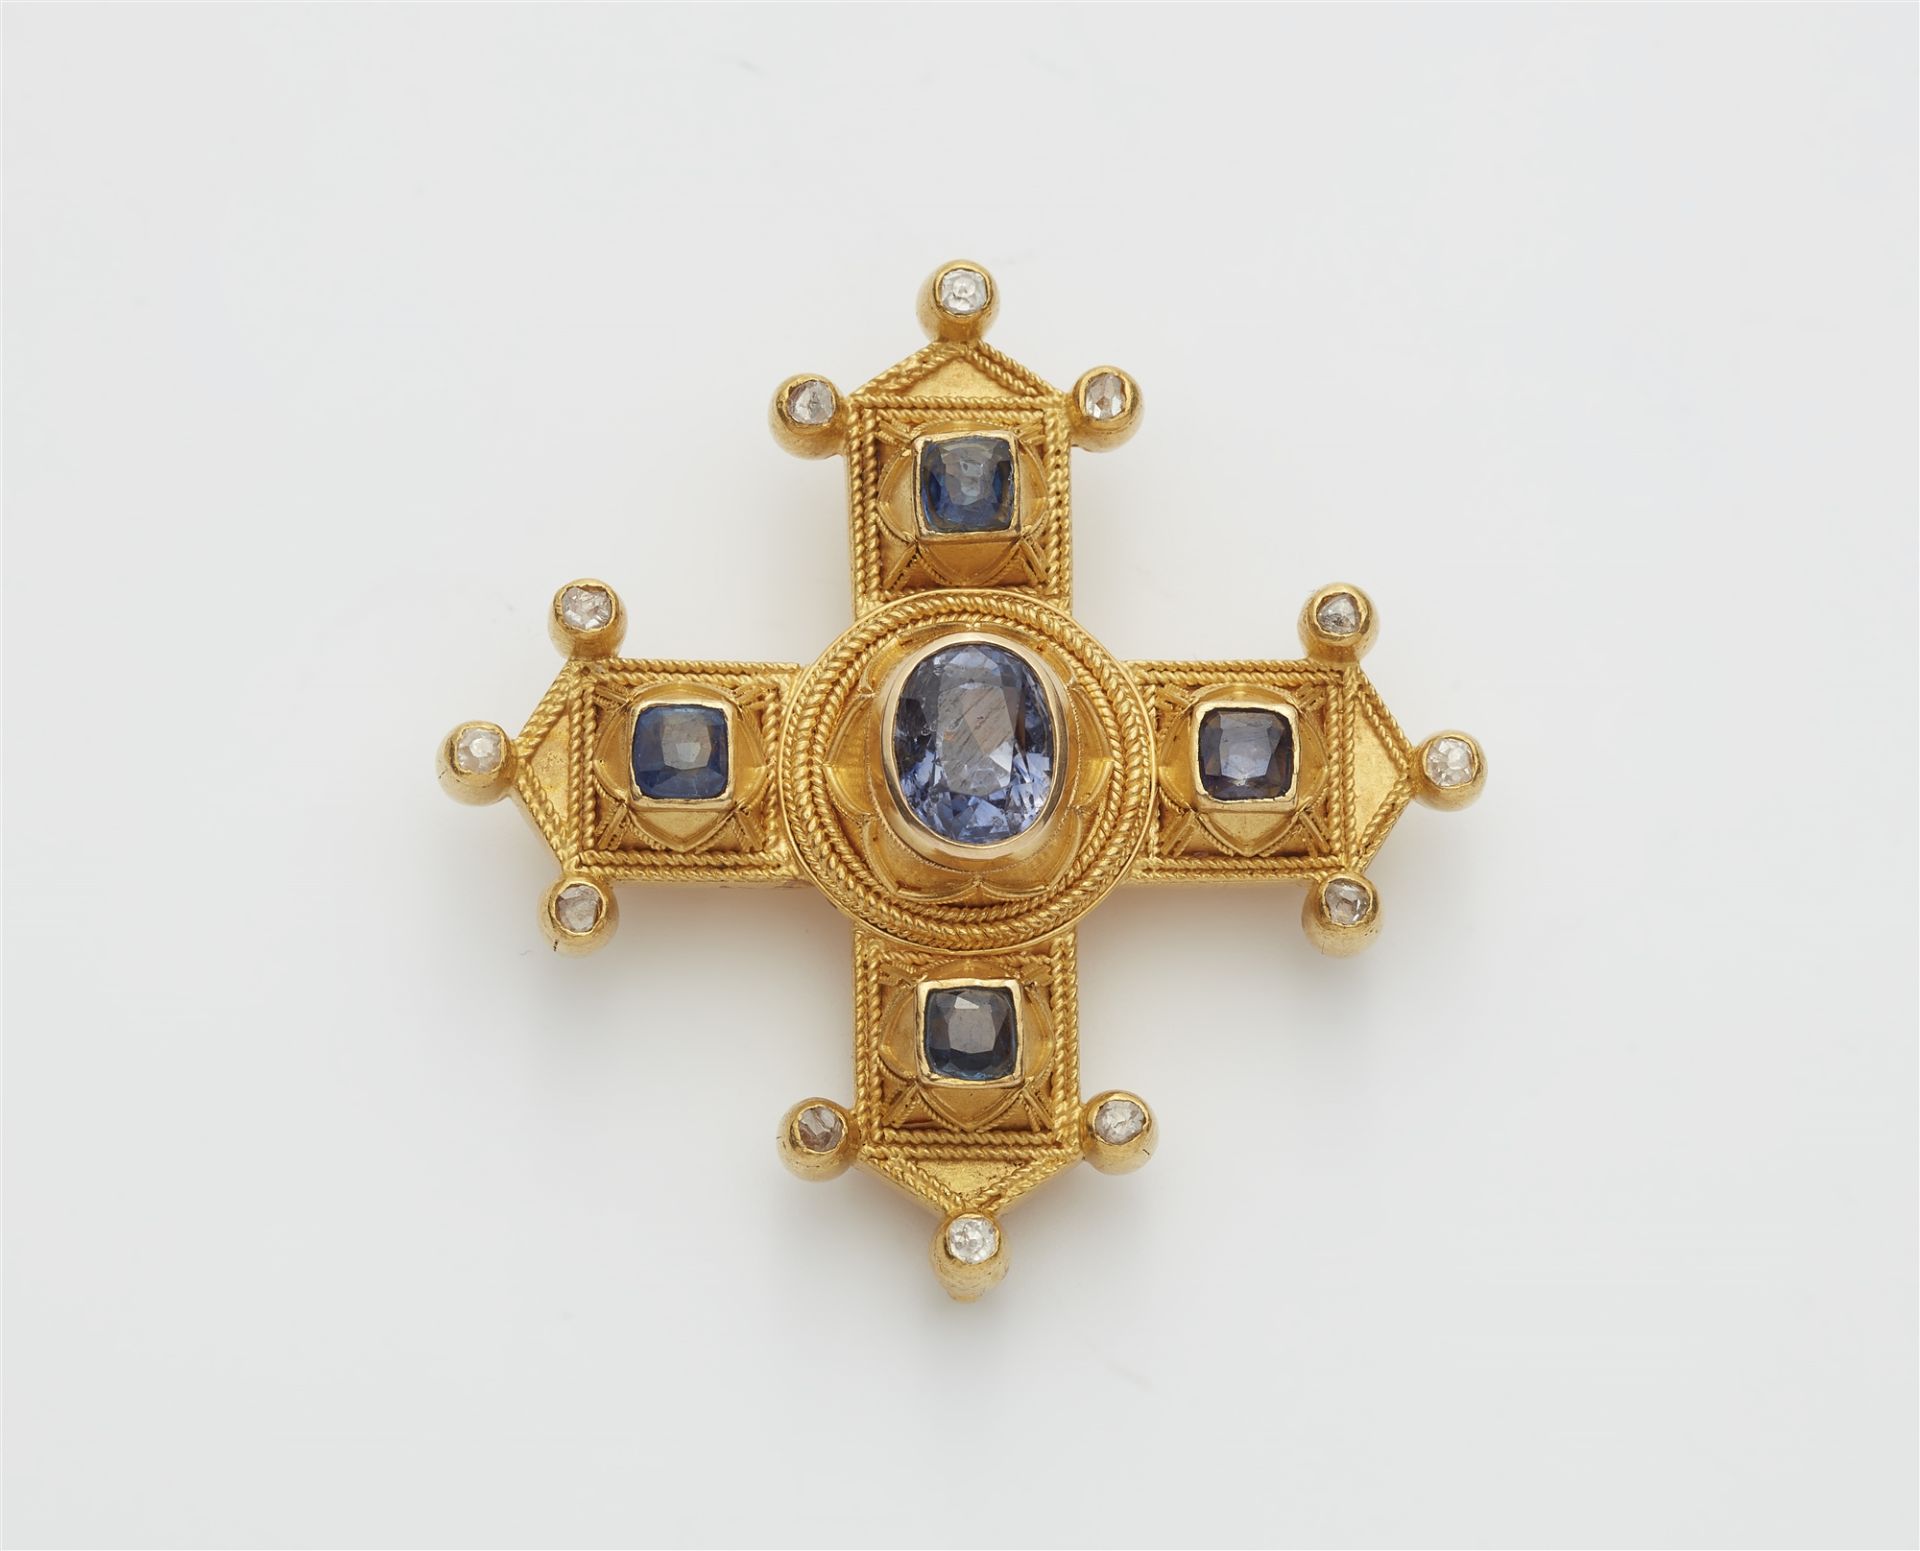 An Italian Byzantine Revival 18k gold and sapphire cross pendant brooch.